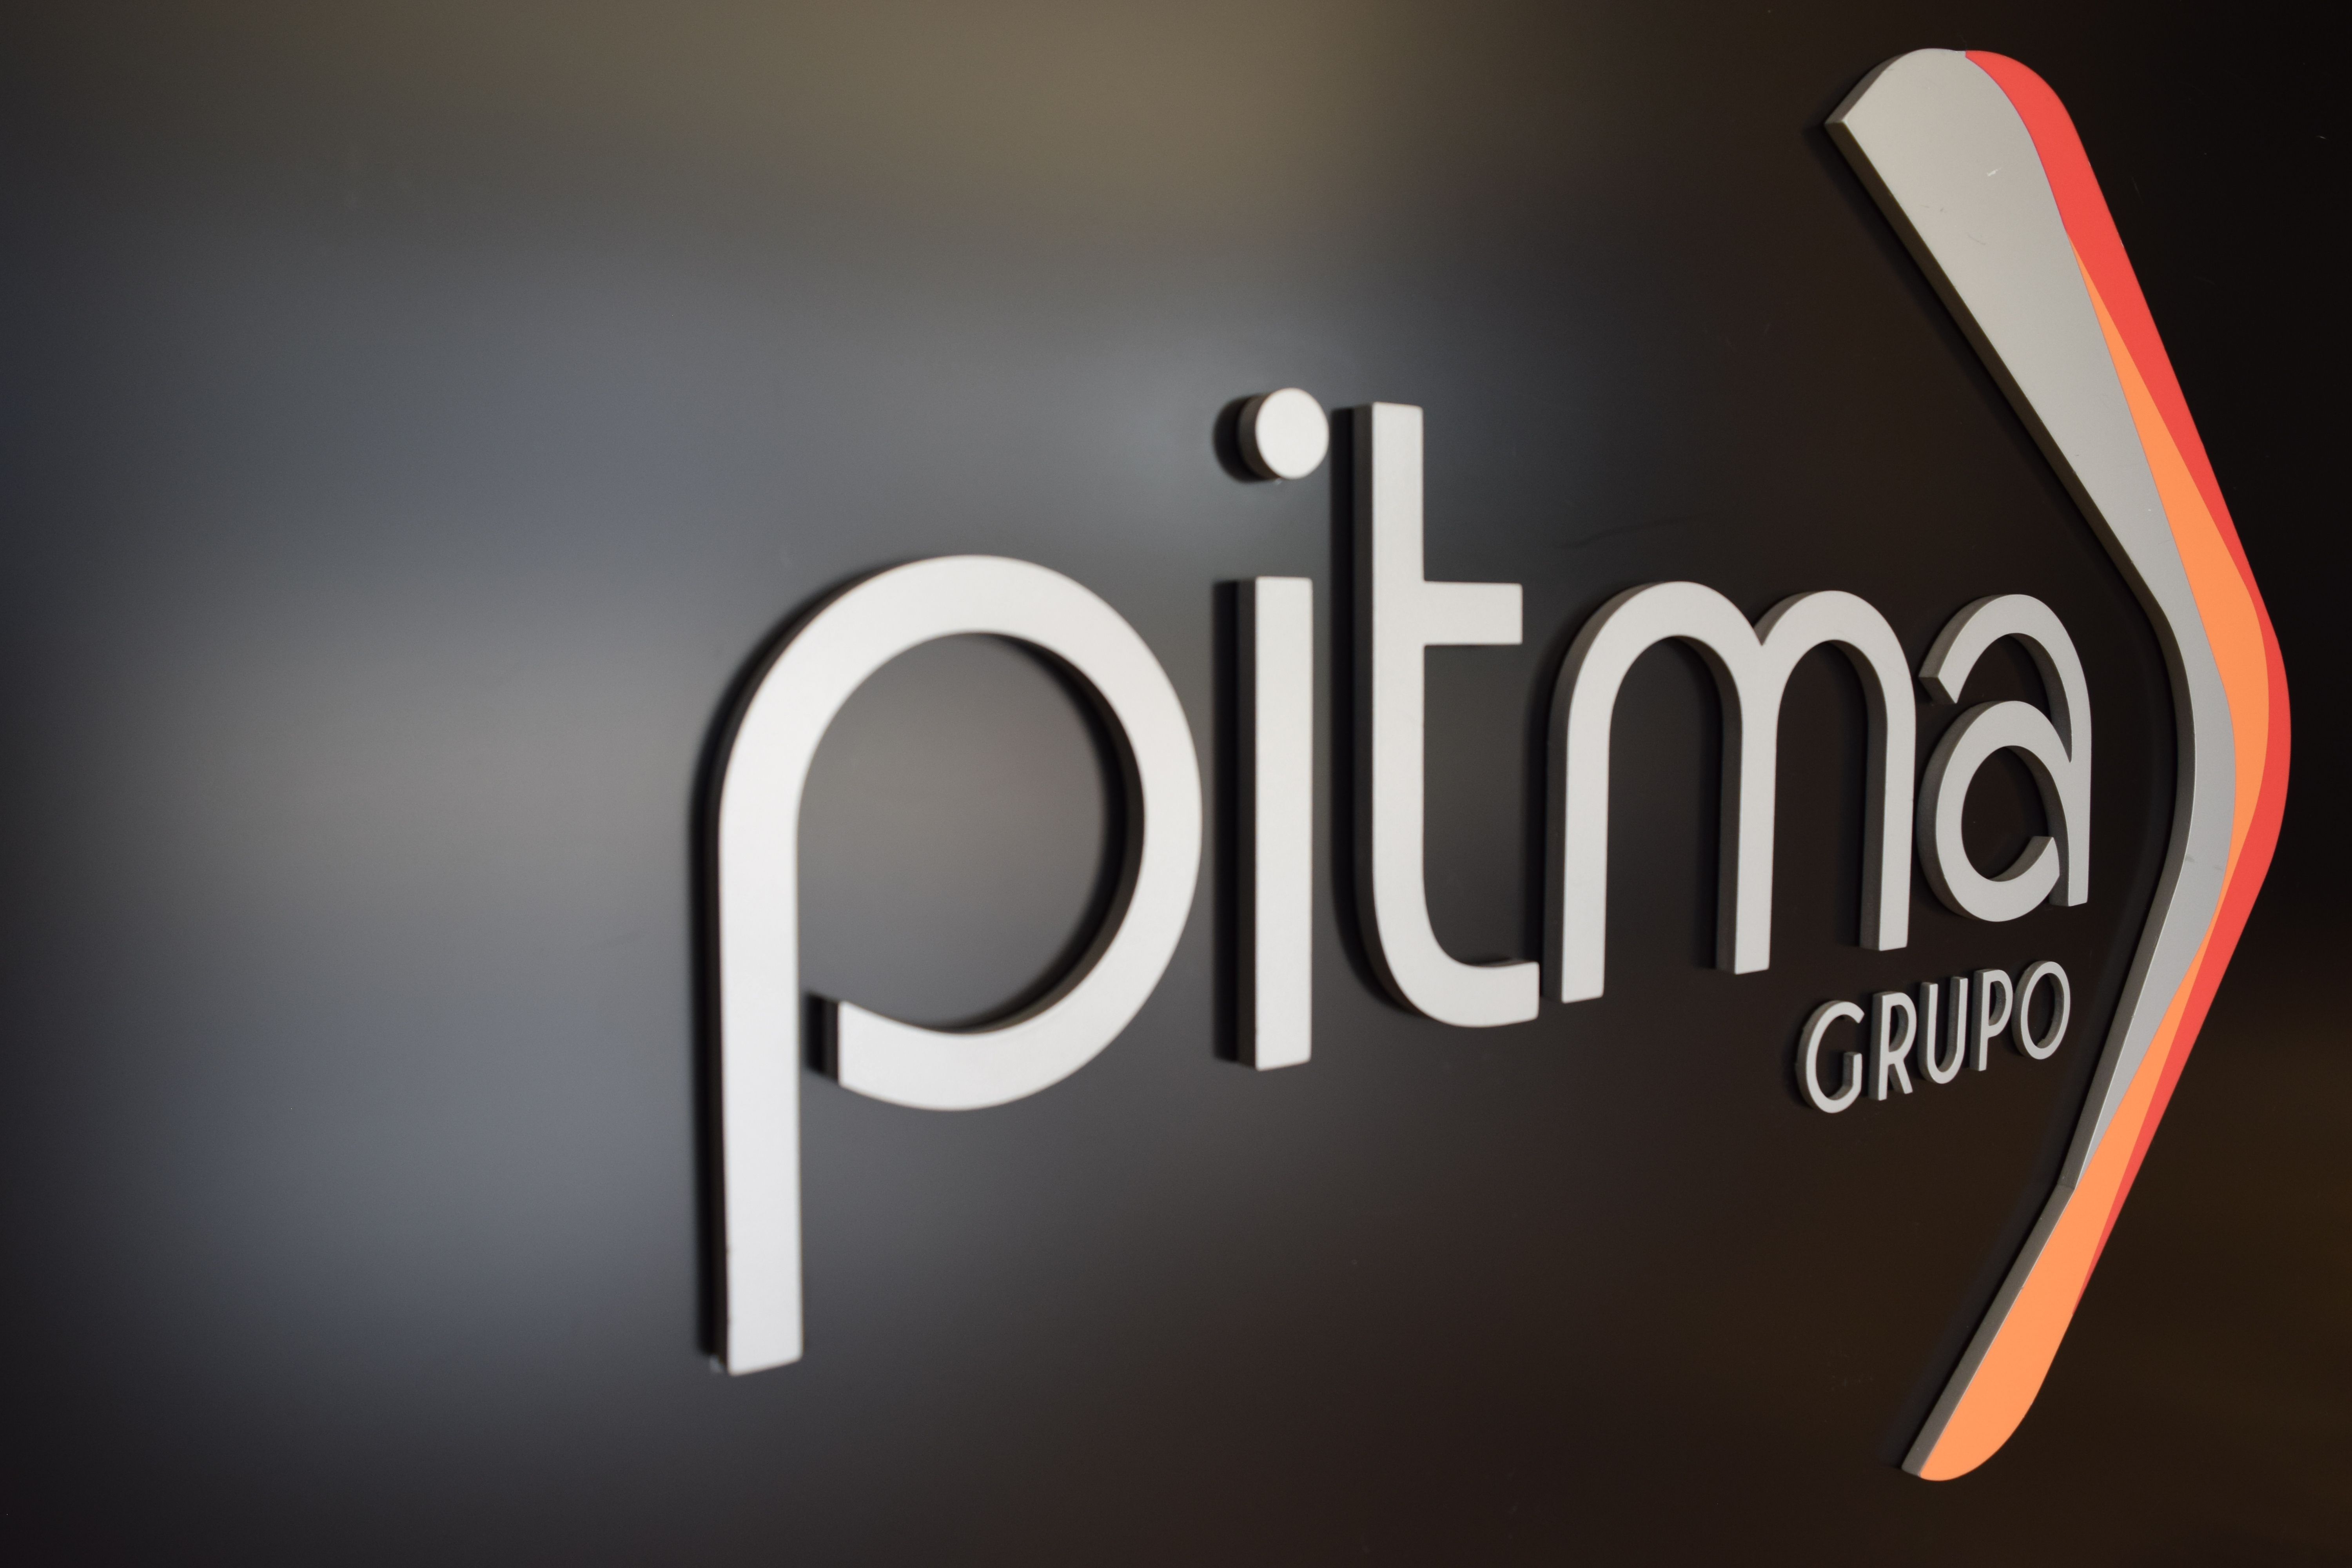 Logotipo corpóreo grupo PITMA